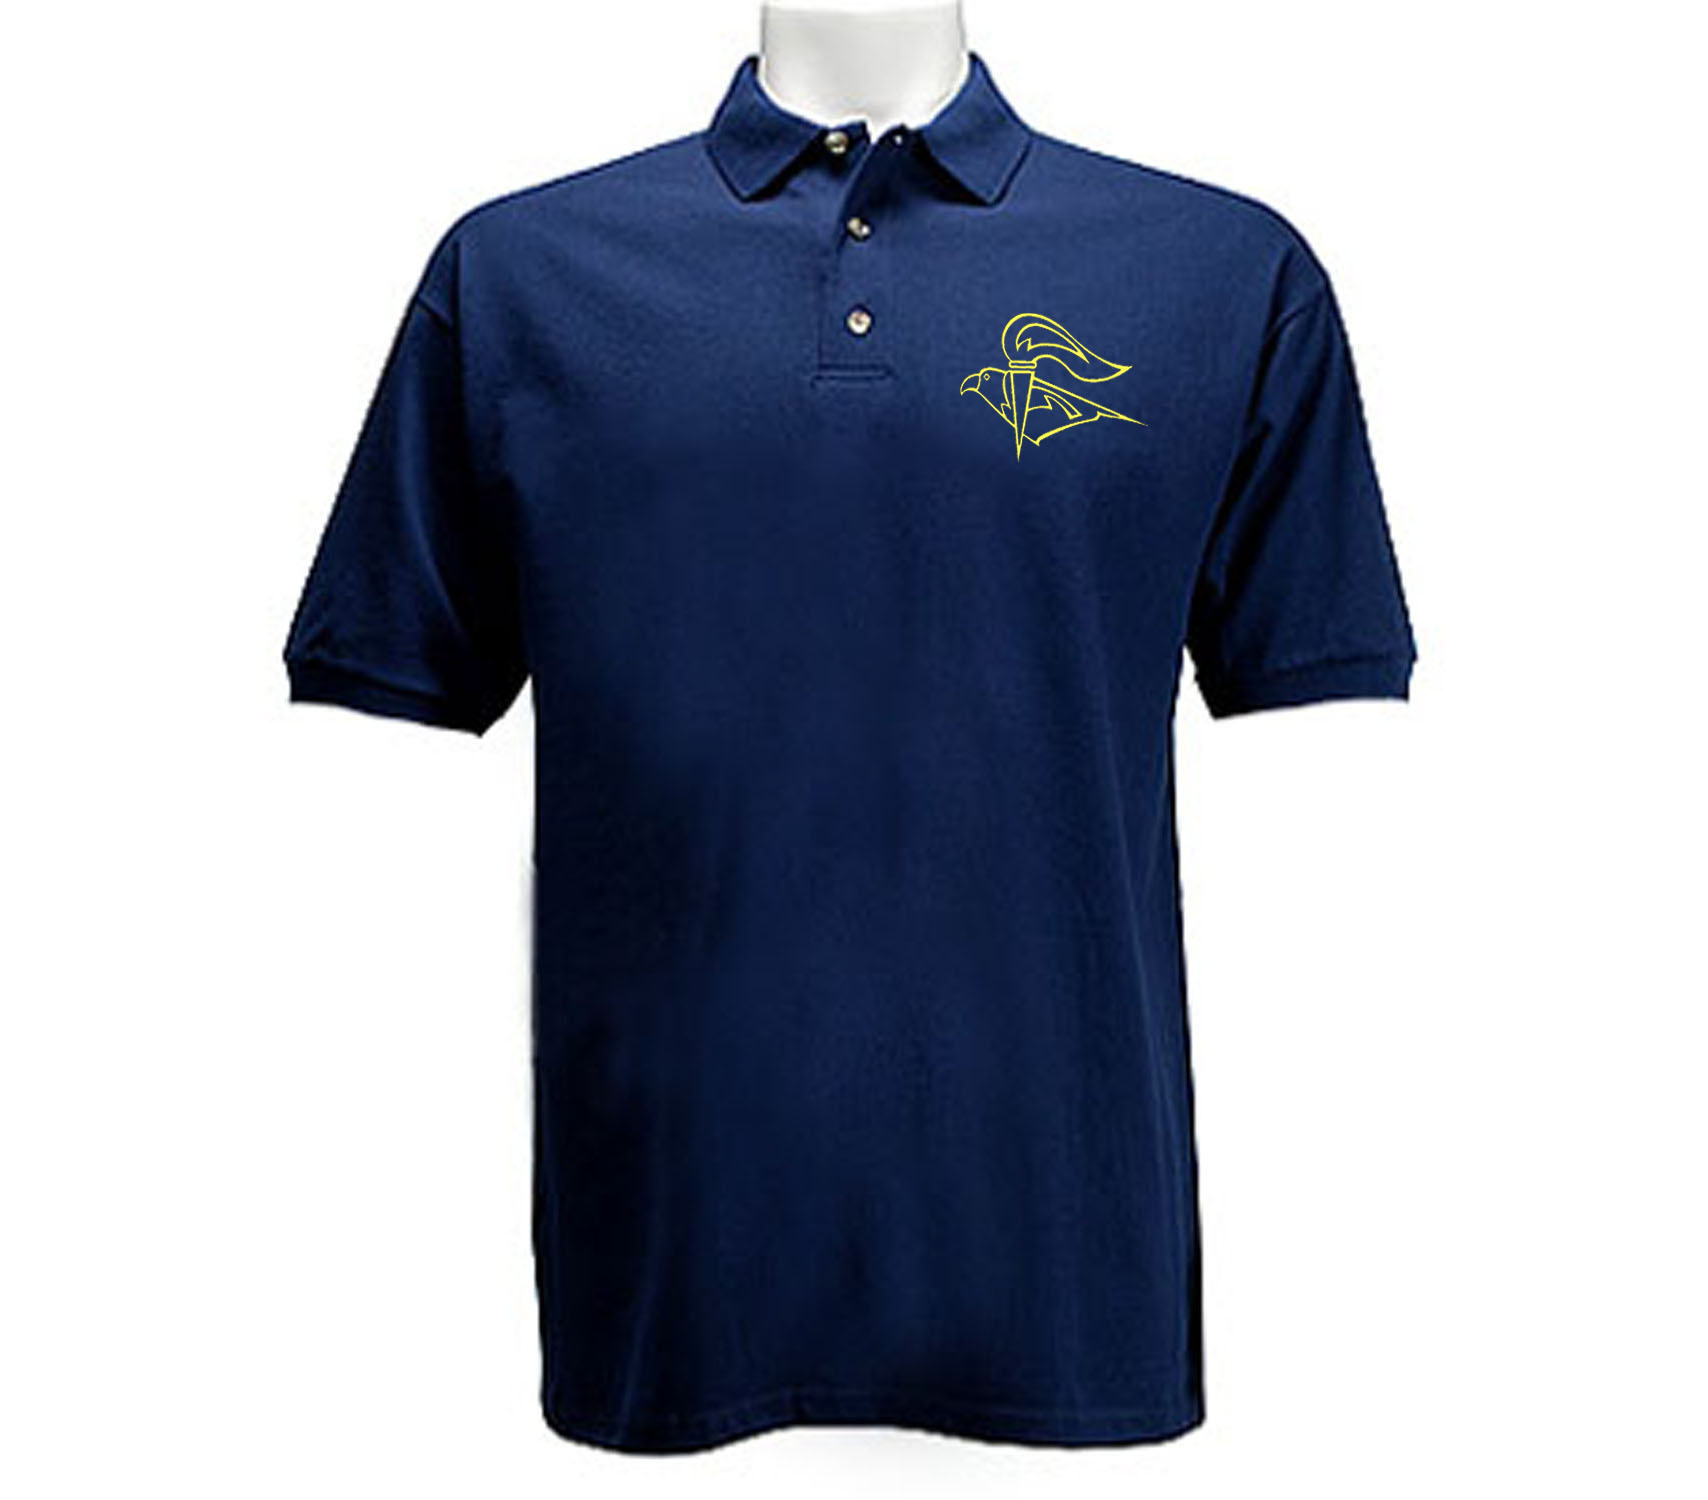 IDF Israel army Flight Academy polo style navy blue t-shirt